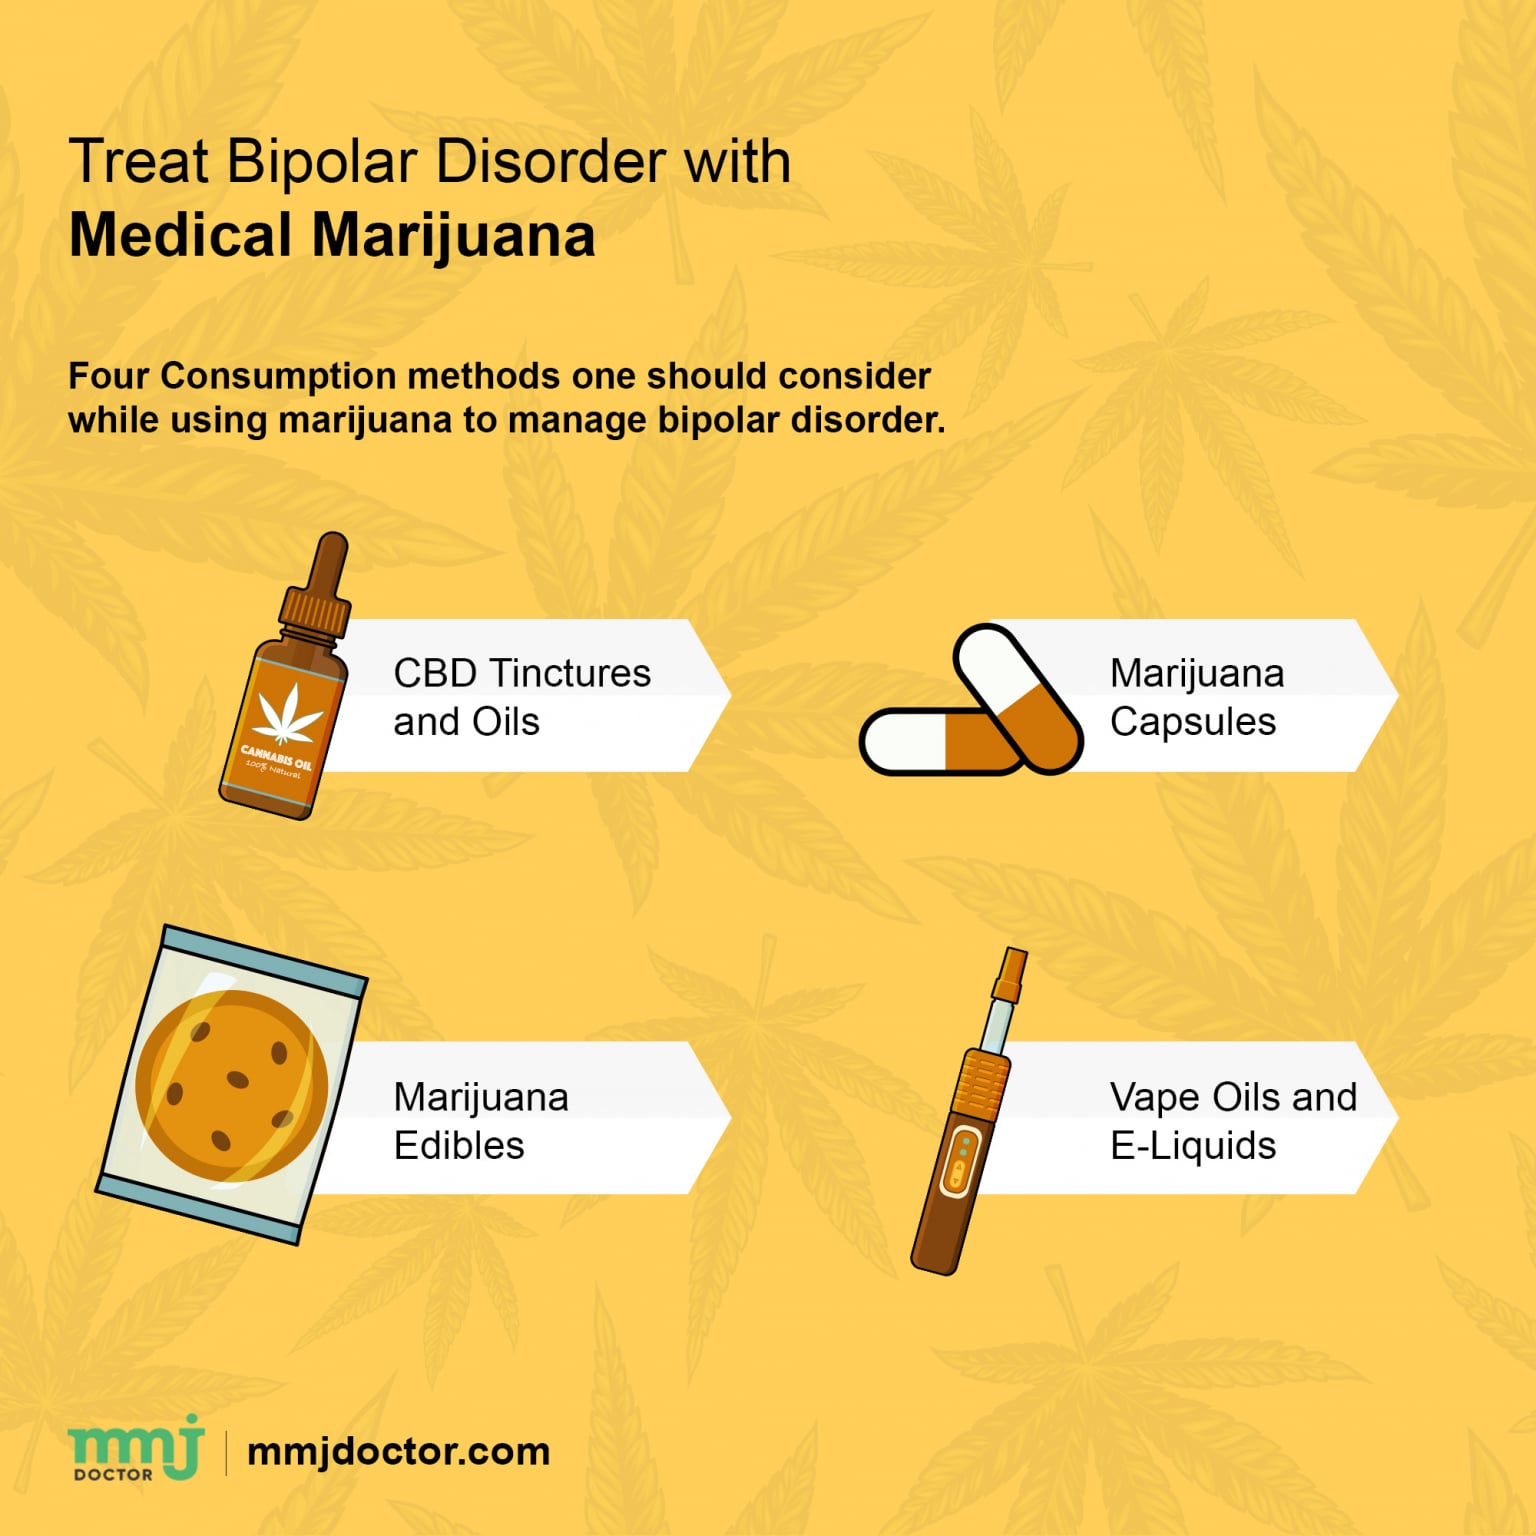 How Medical Marijuana Helps to Treat Bipolar Disorder